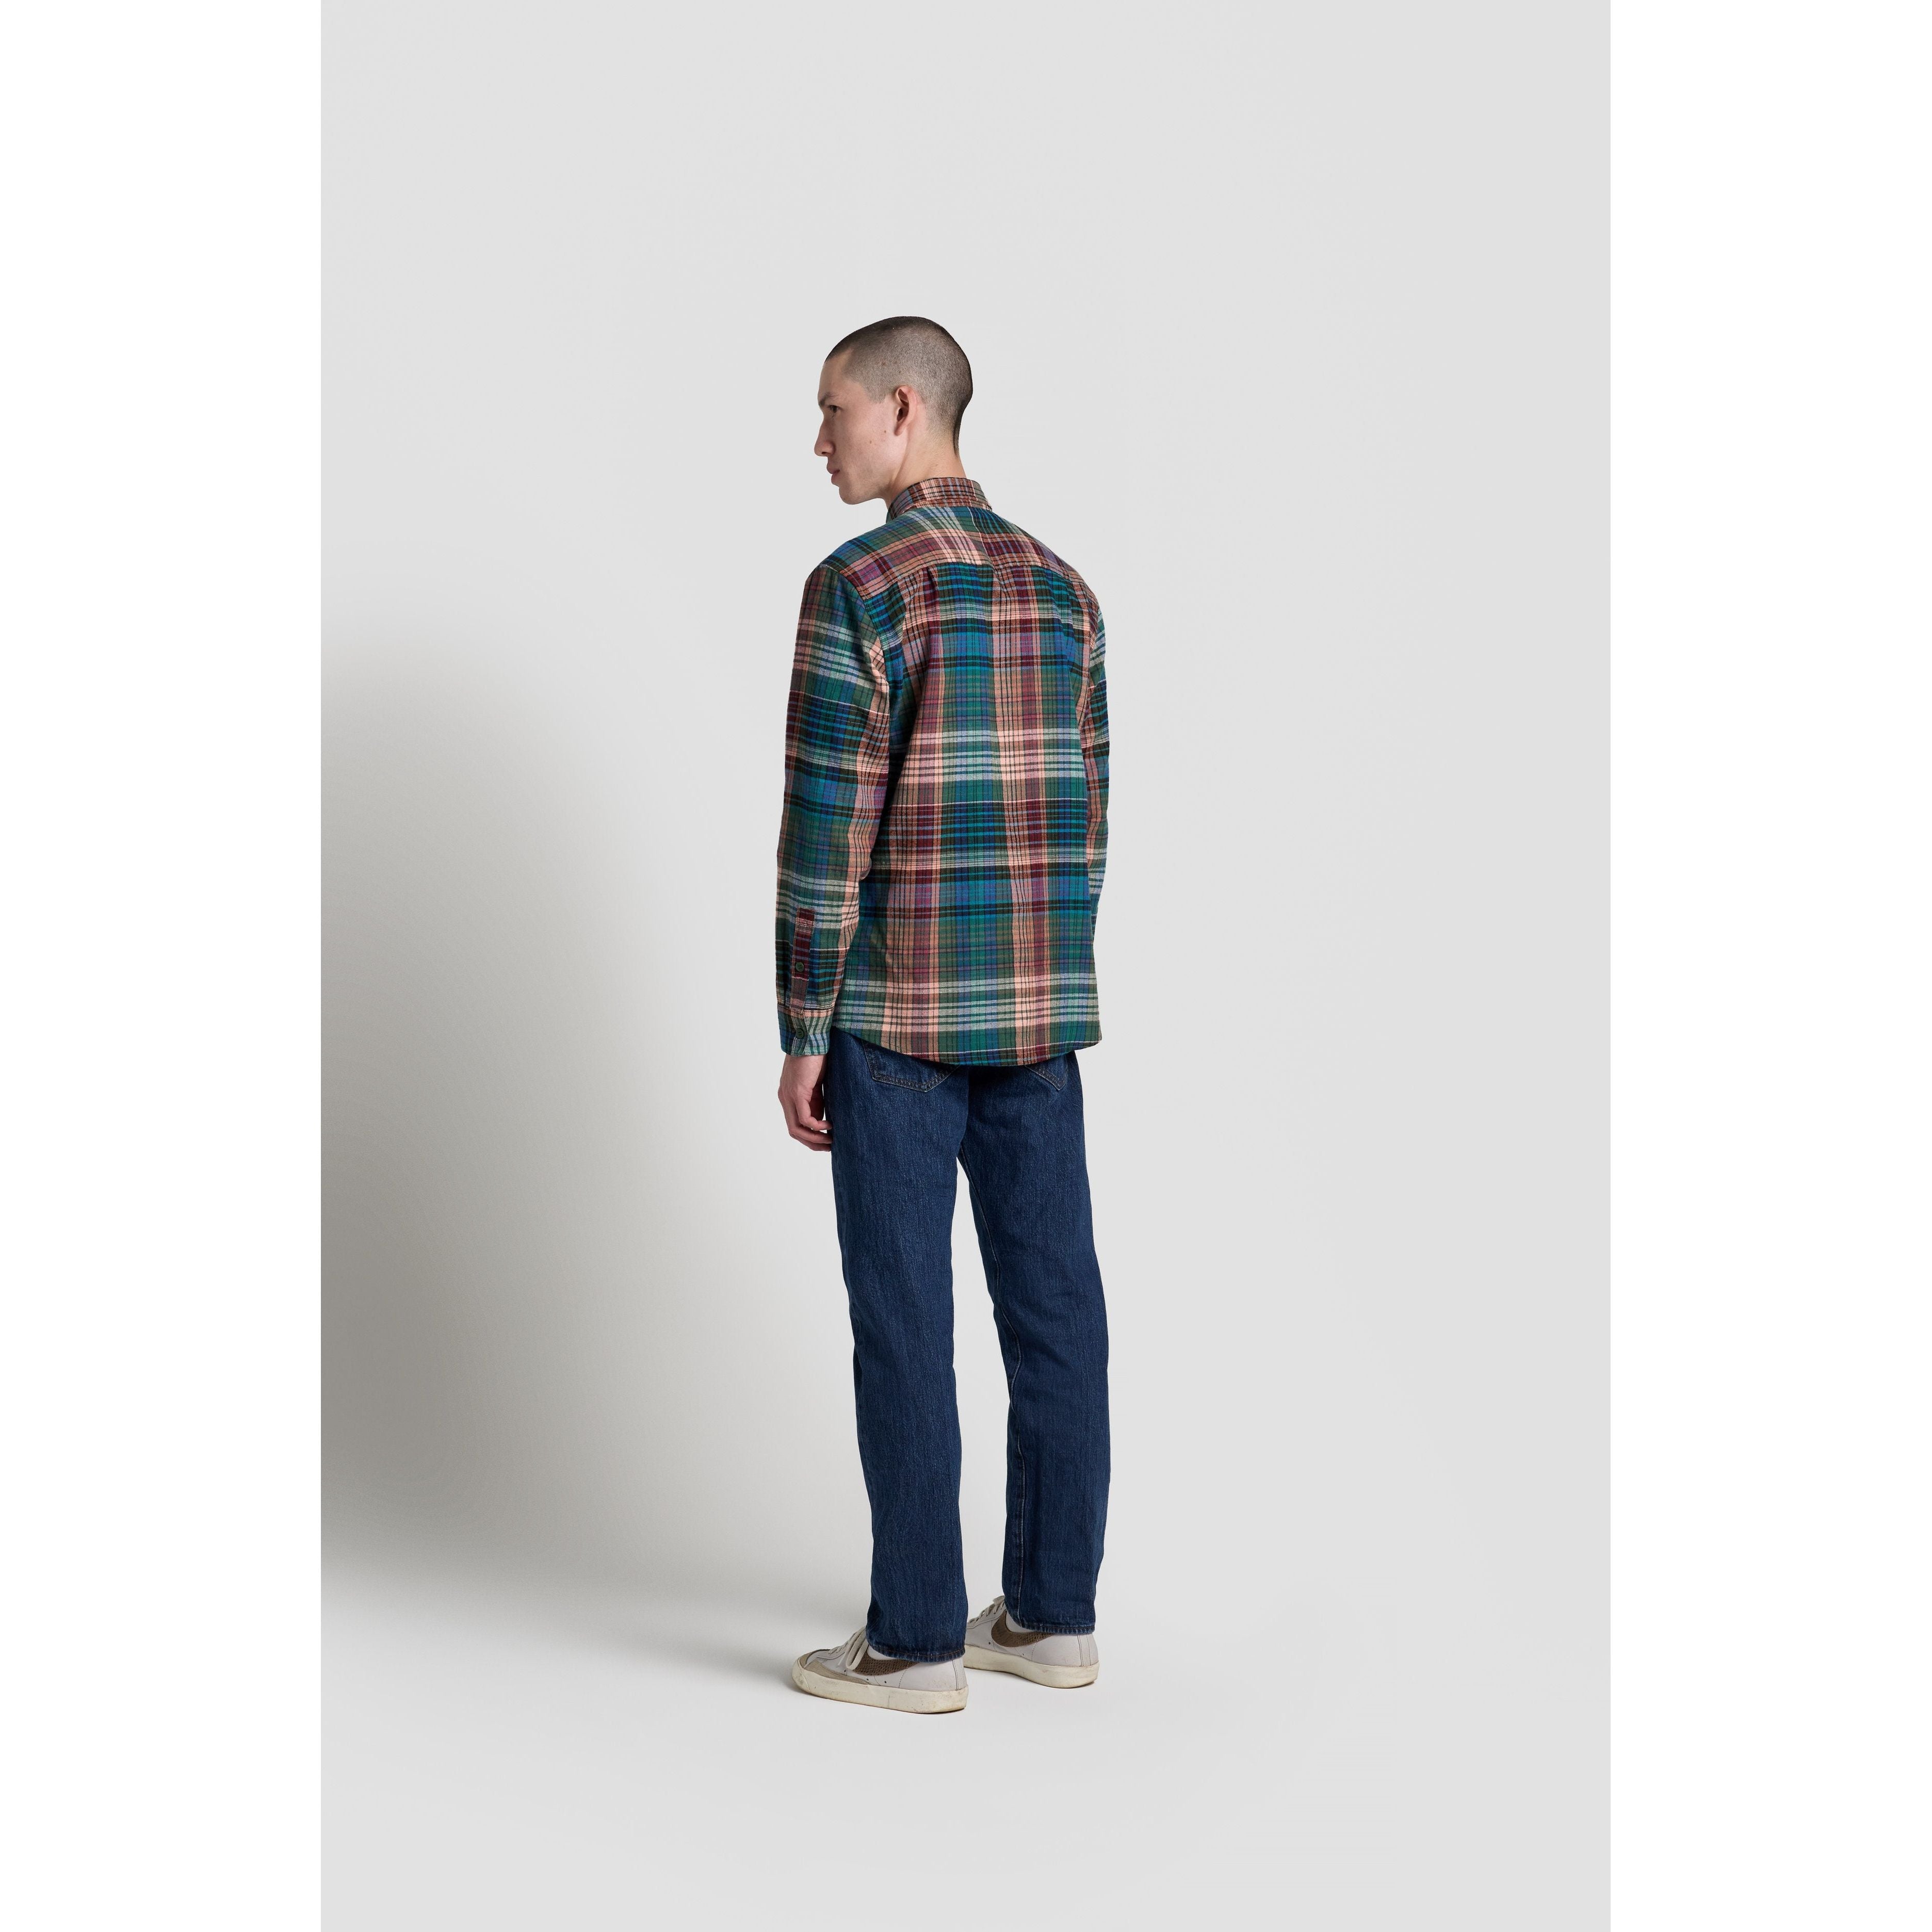 Poplin & Co - Mid Weight Flannel Shirt in Alta Plaid-SQ4677622